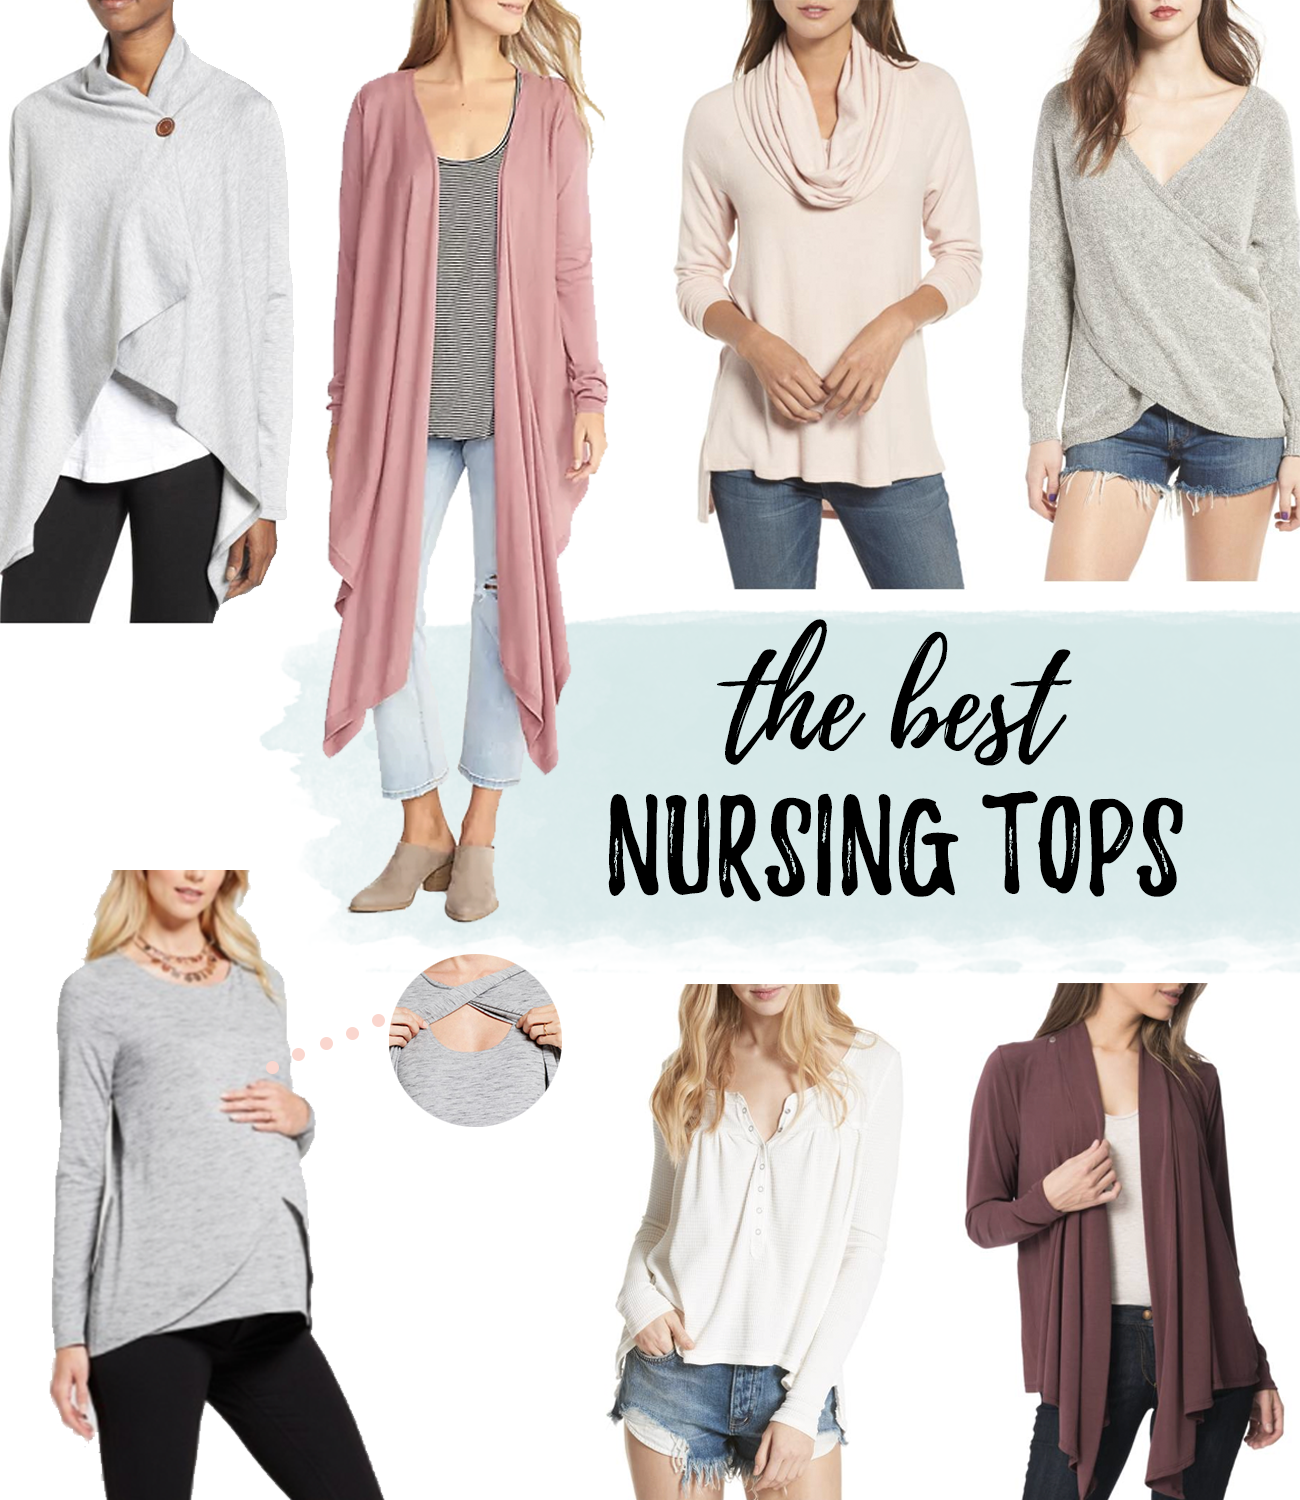 https://pinterestingplans.com/wp-content/uploads/2018/03/best-nursing-tops-1.png